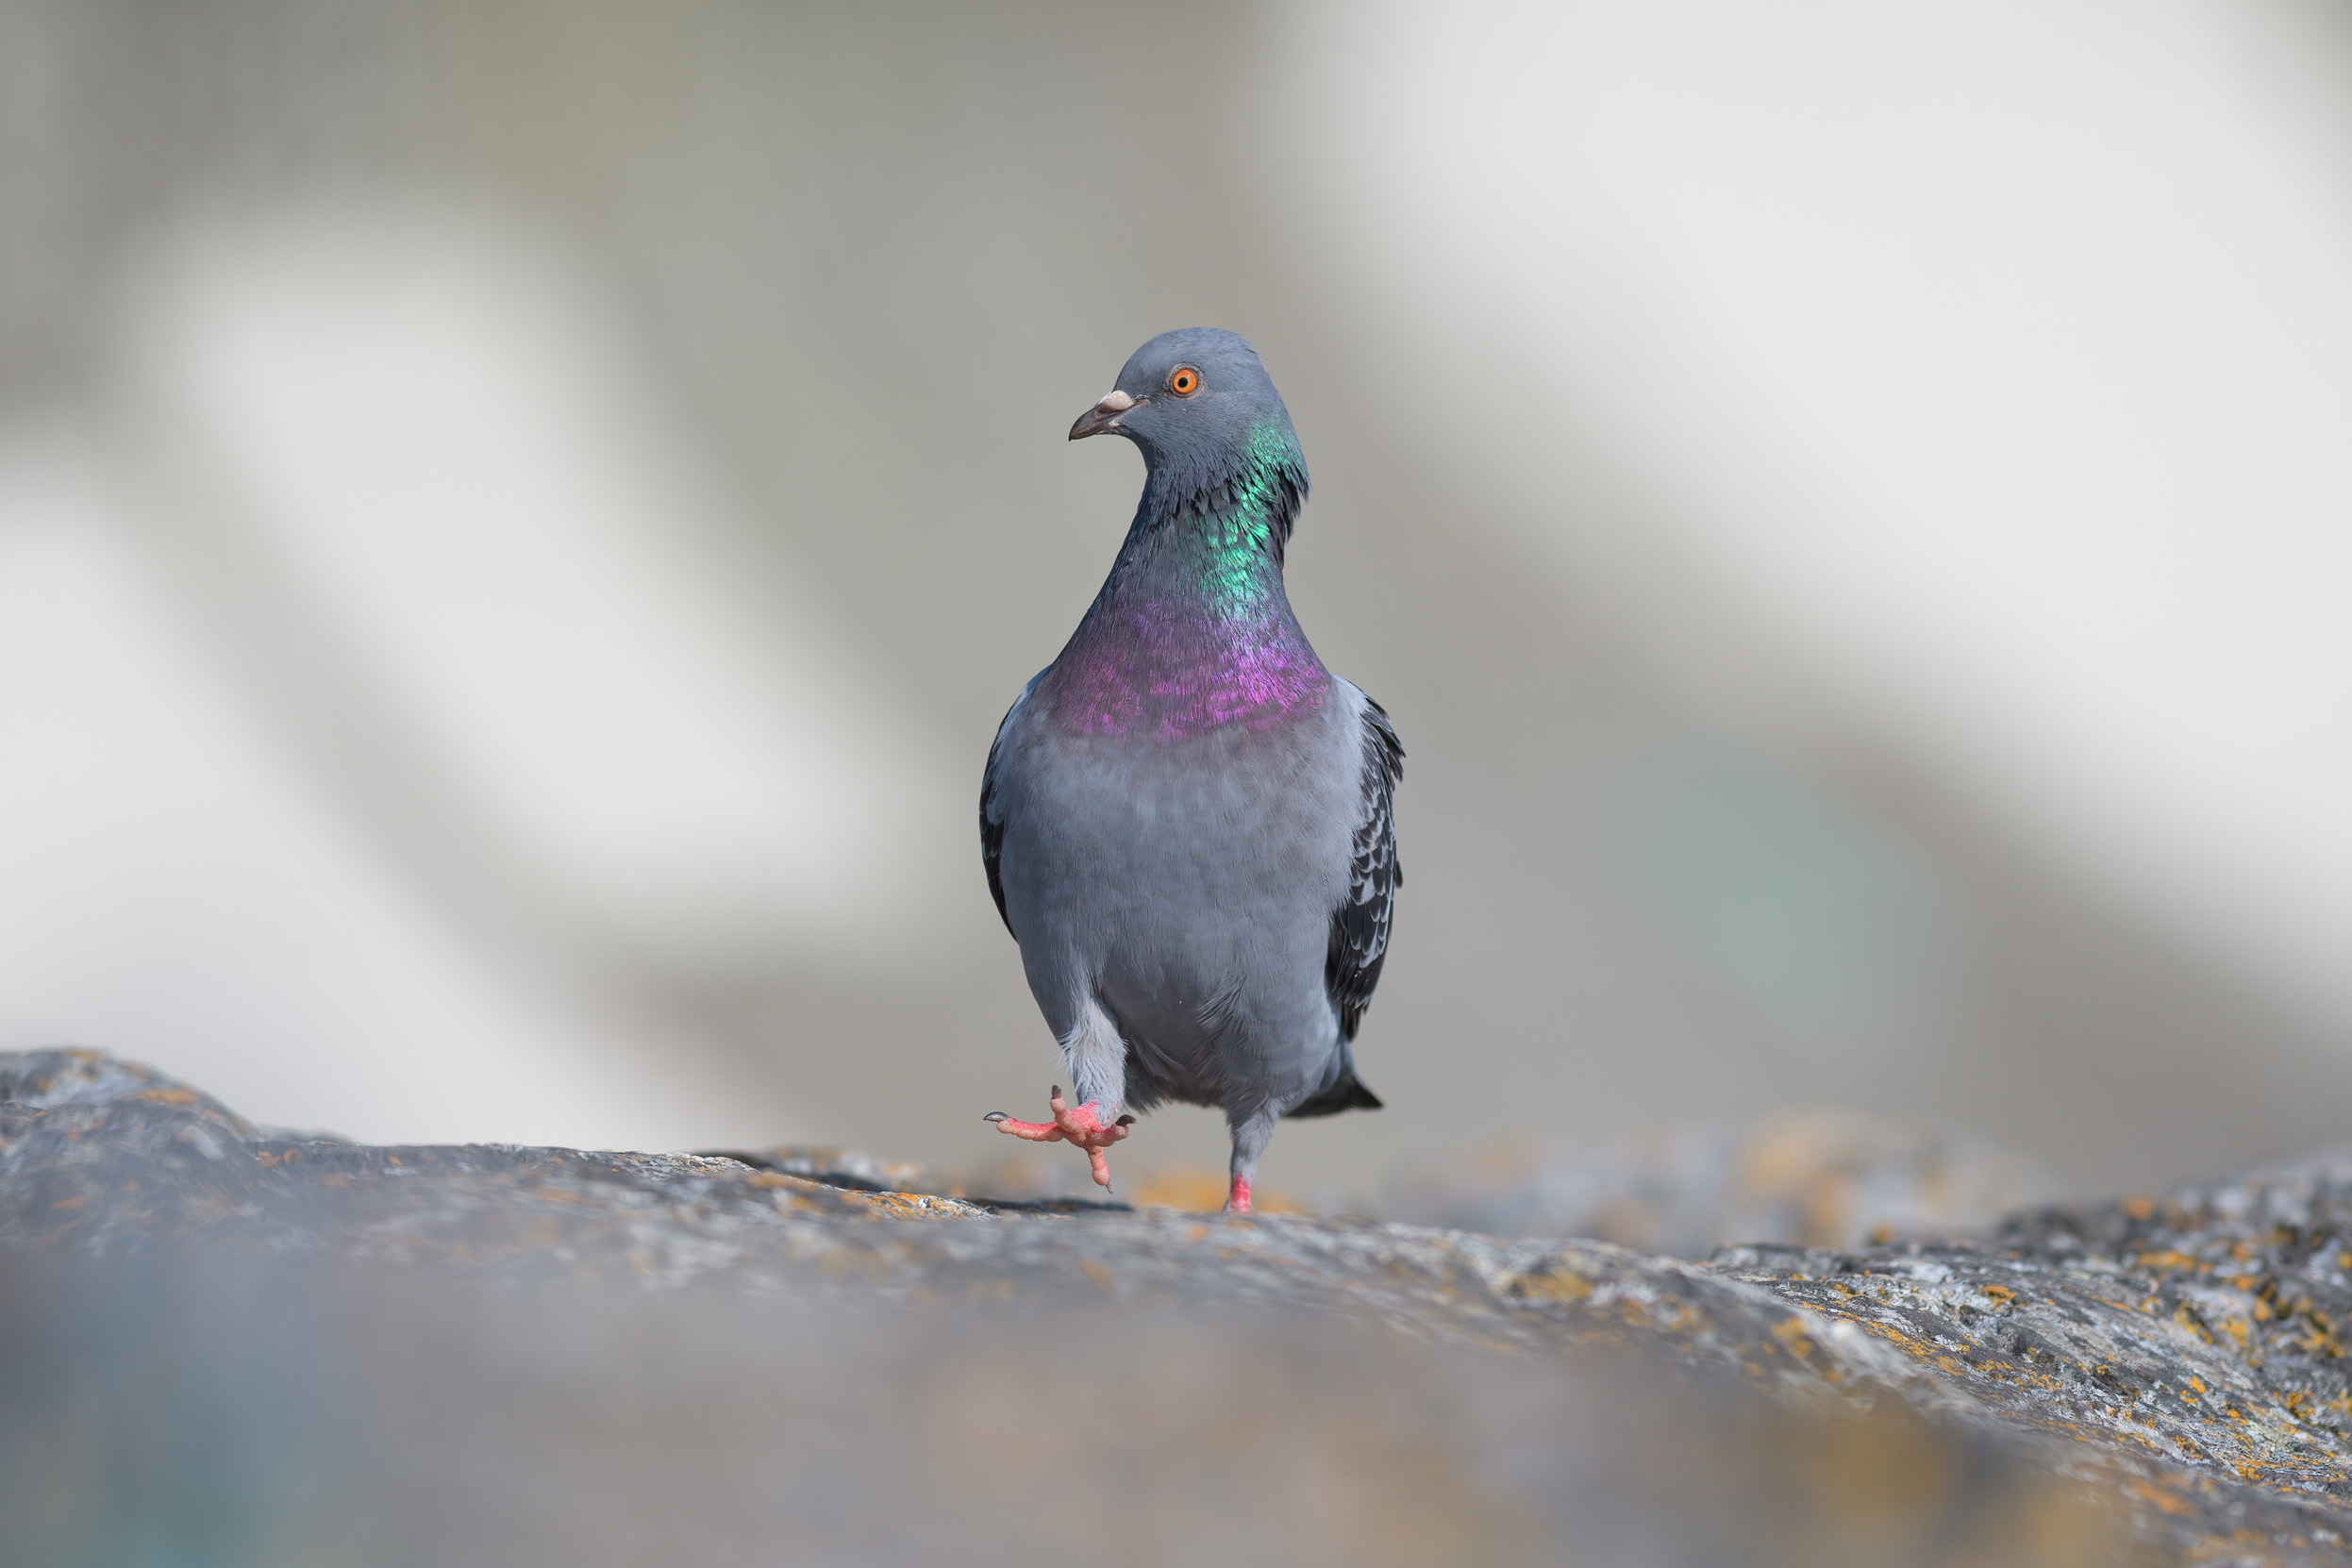 A Pigeon walking along a rock